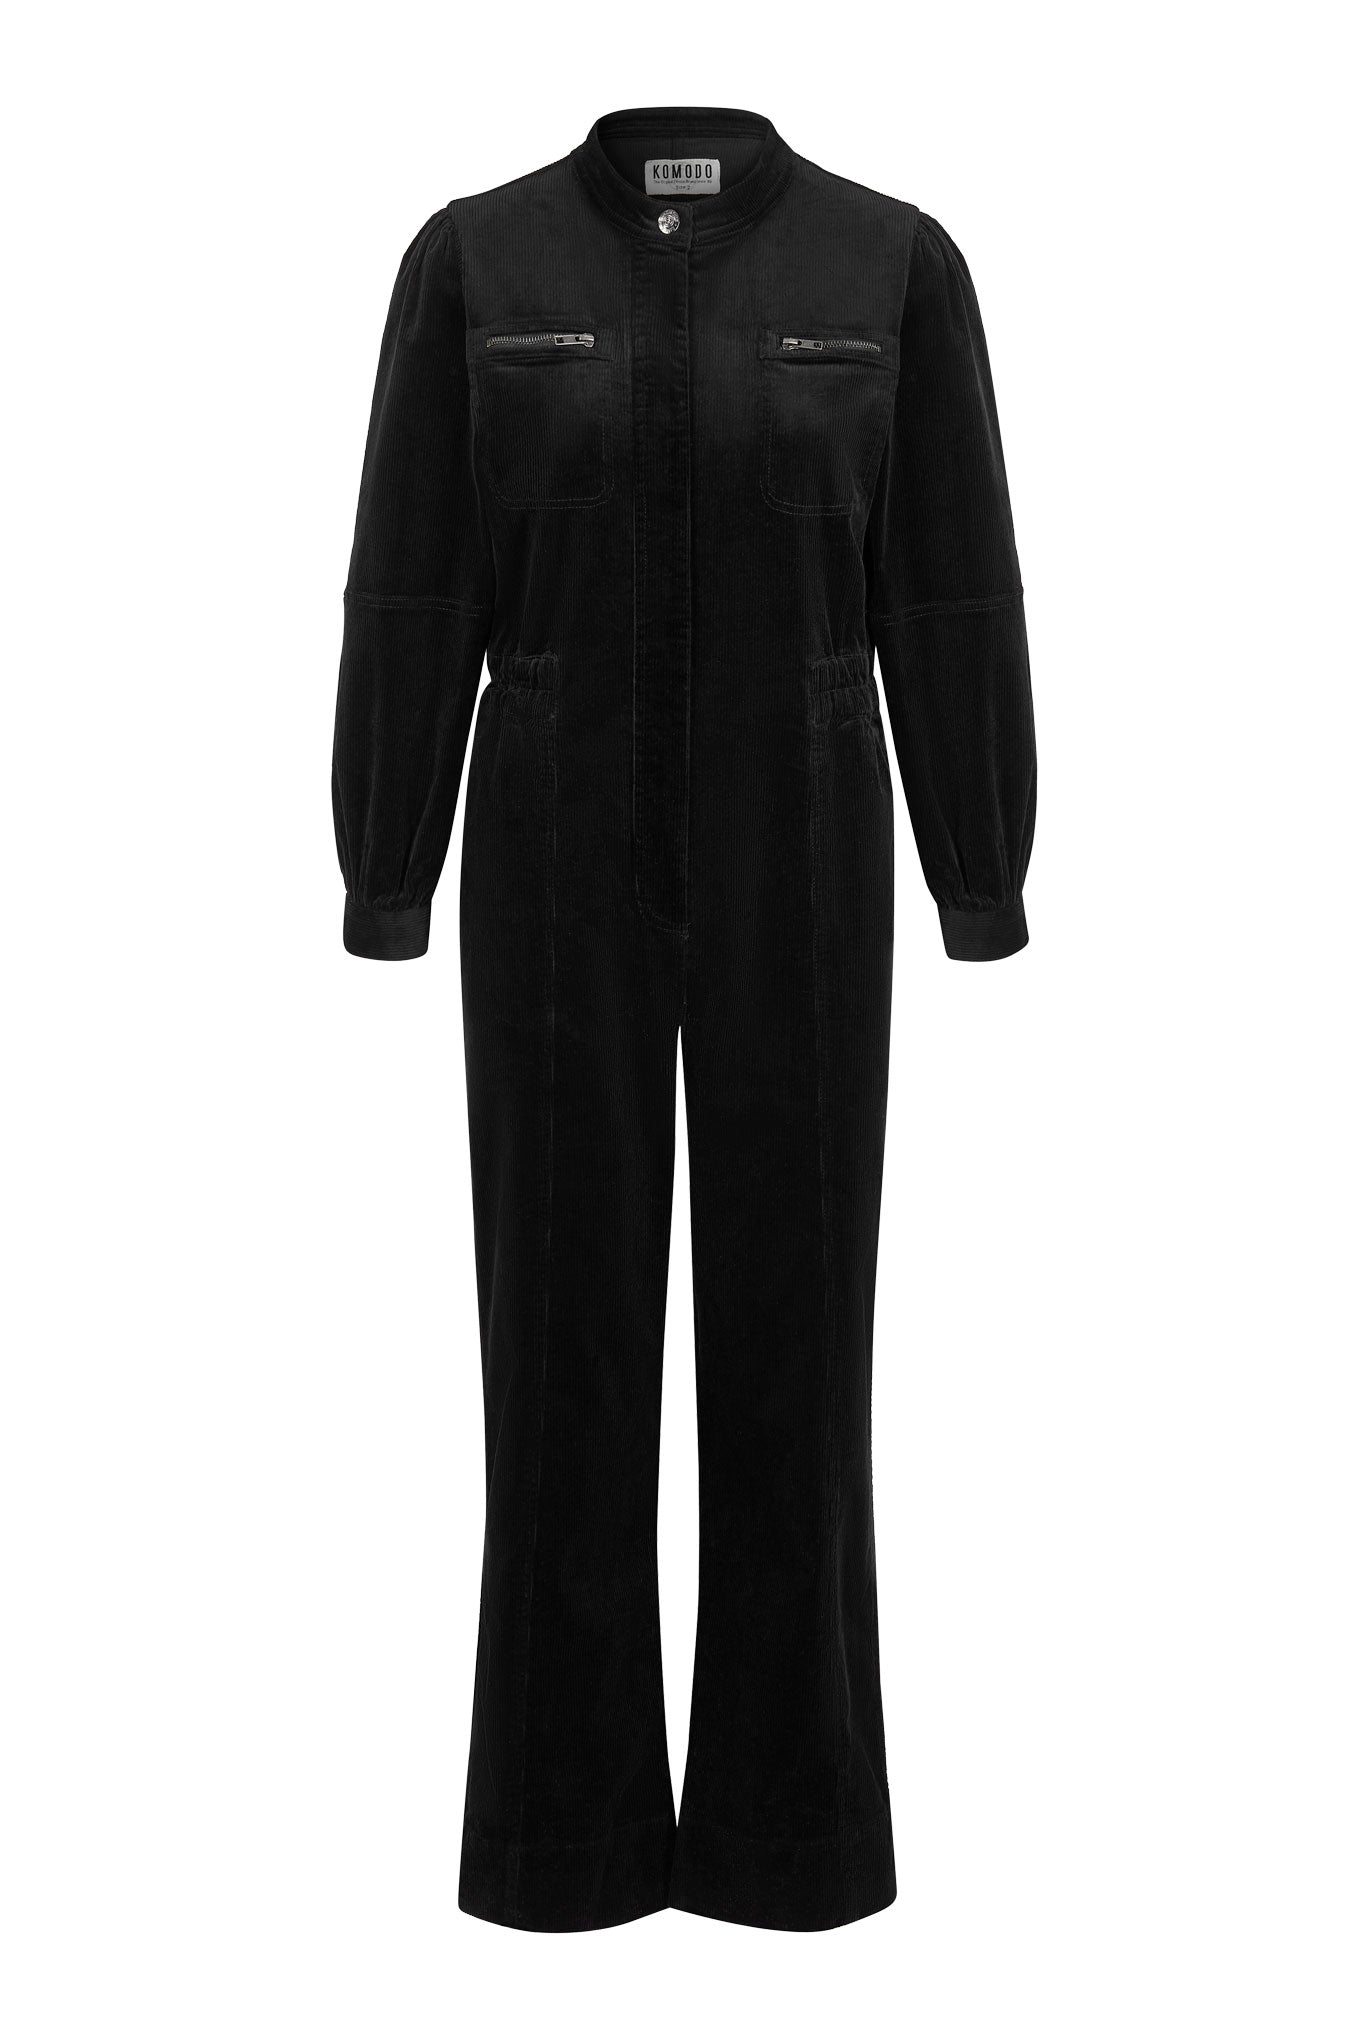 Komodo Women's Kawa - Organic Cotton Jumpsuit Black